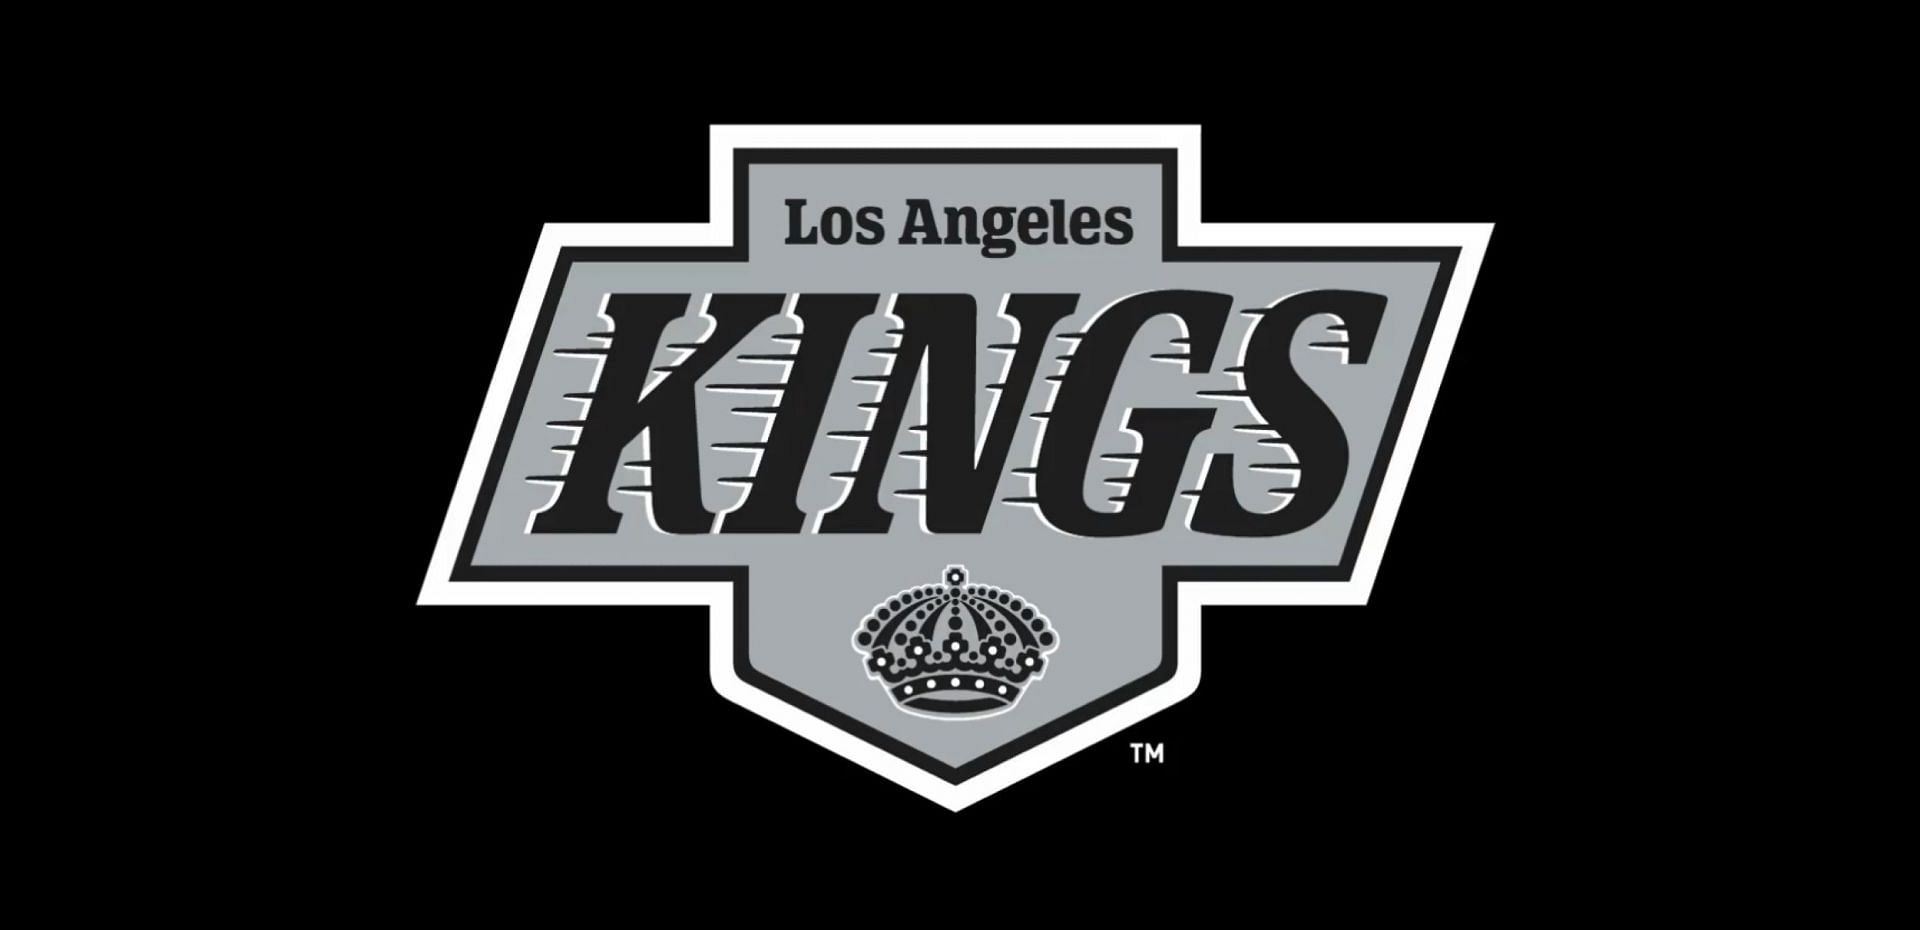 Los Angeles Kings logo history: How LA's NHL franchise has rebranded ...